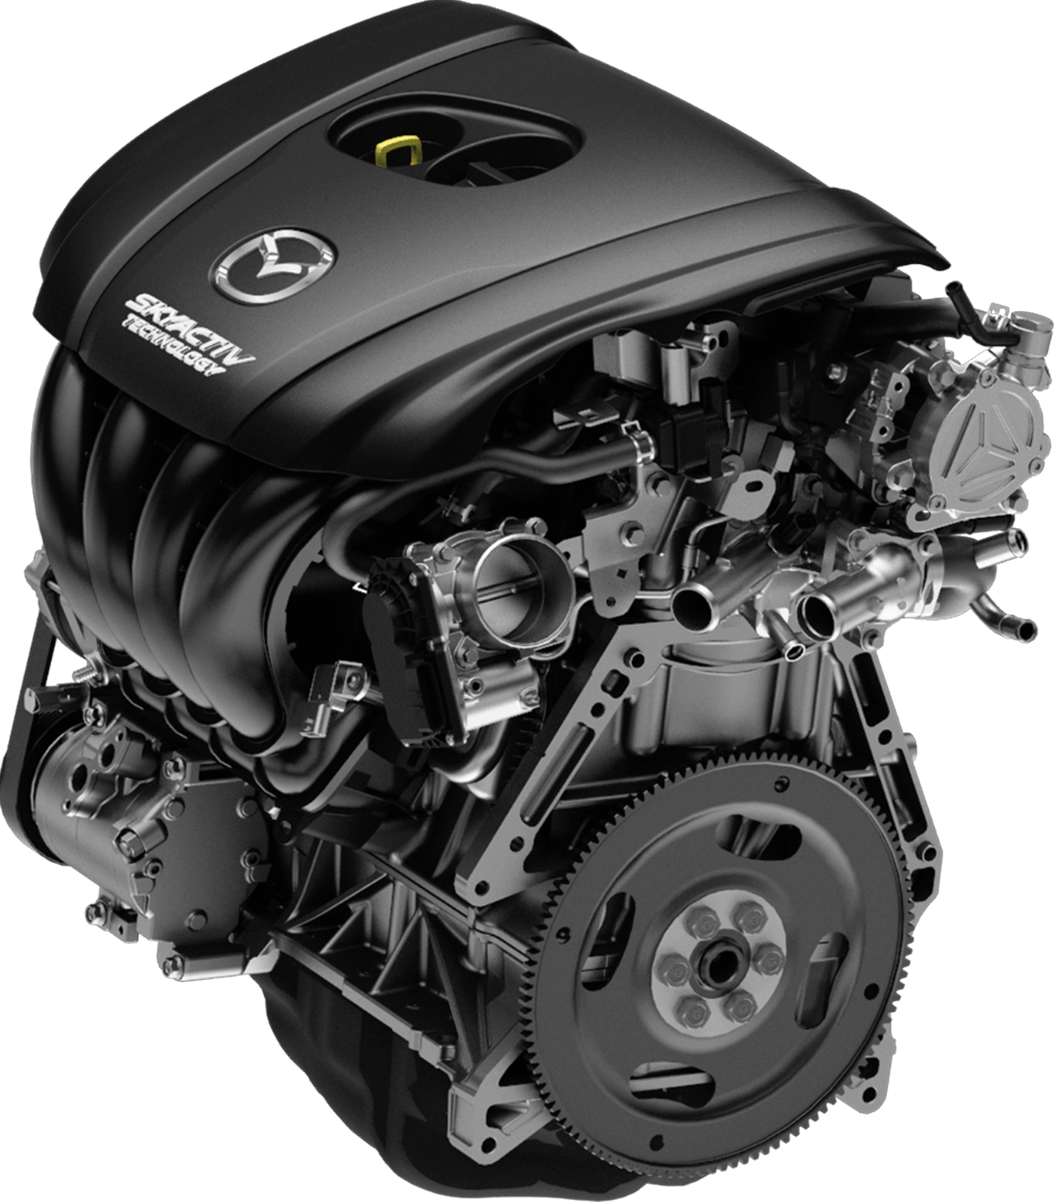 Двигатель Mazda CX-5 2.0 SKYACTIV. Мазда SKYACTIV-G двигатель. Мазда 6 SKYACTIV 2.5. Mazda SKYACTIV-G 2.0 двигатель. Двигатель мазда сх 5 2.5